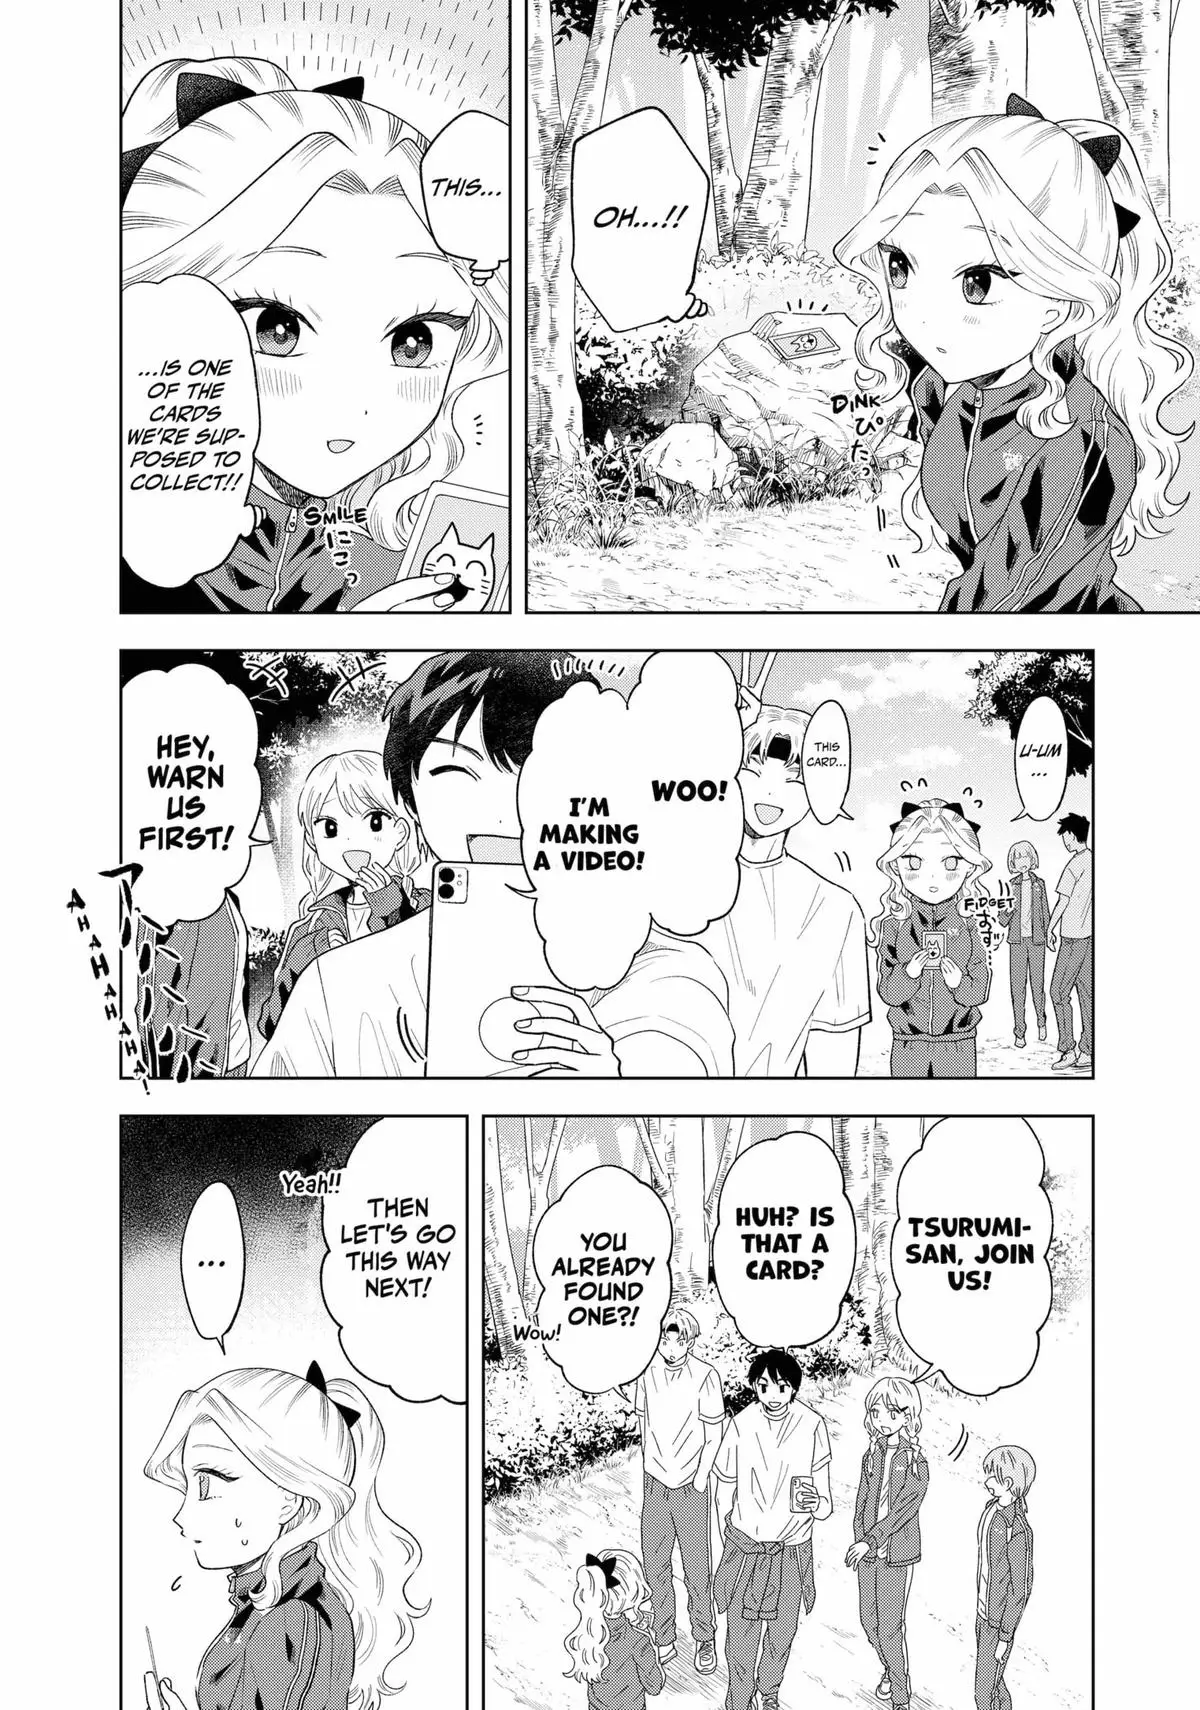 Tsuruko Returns The Favor - 6 page 4-7efe1854